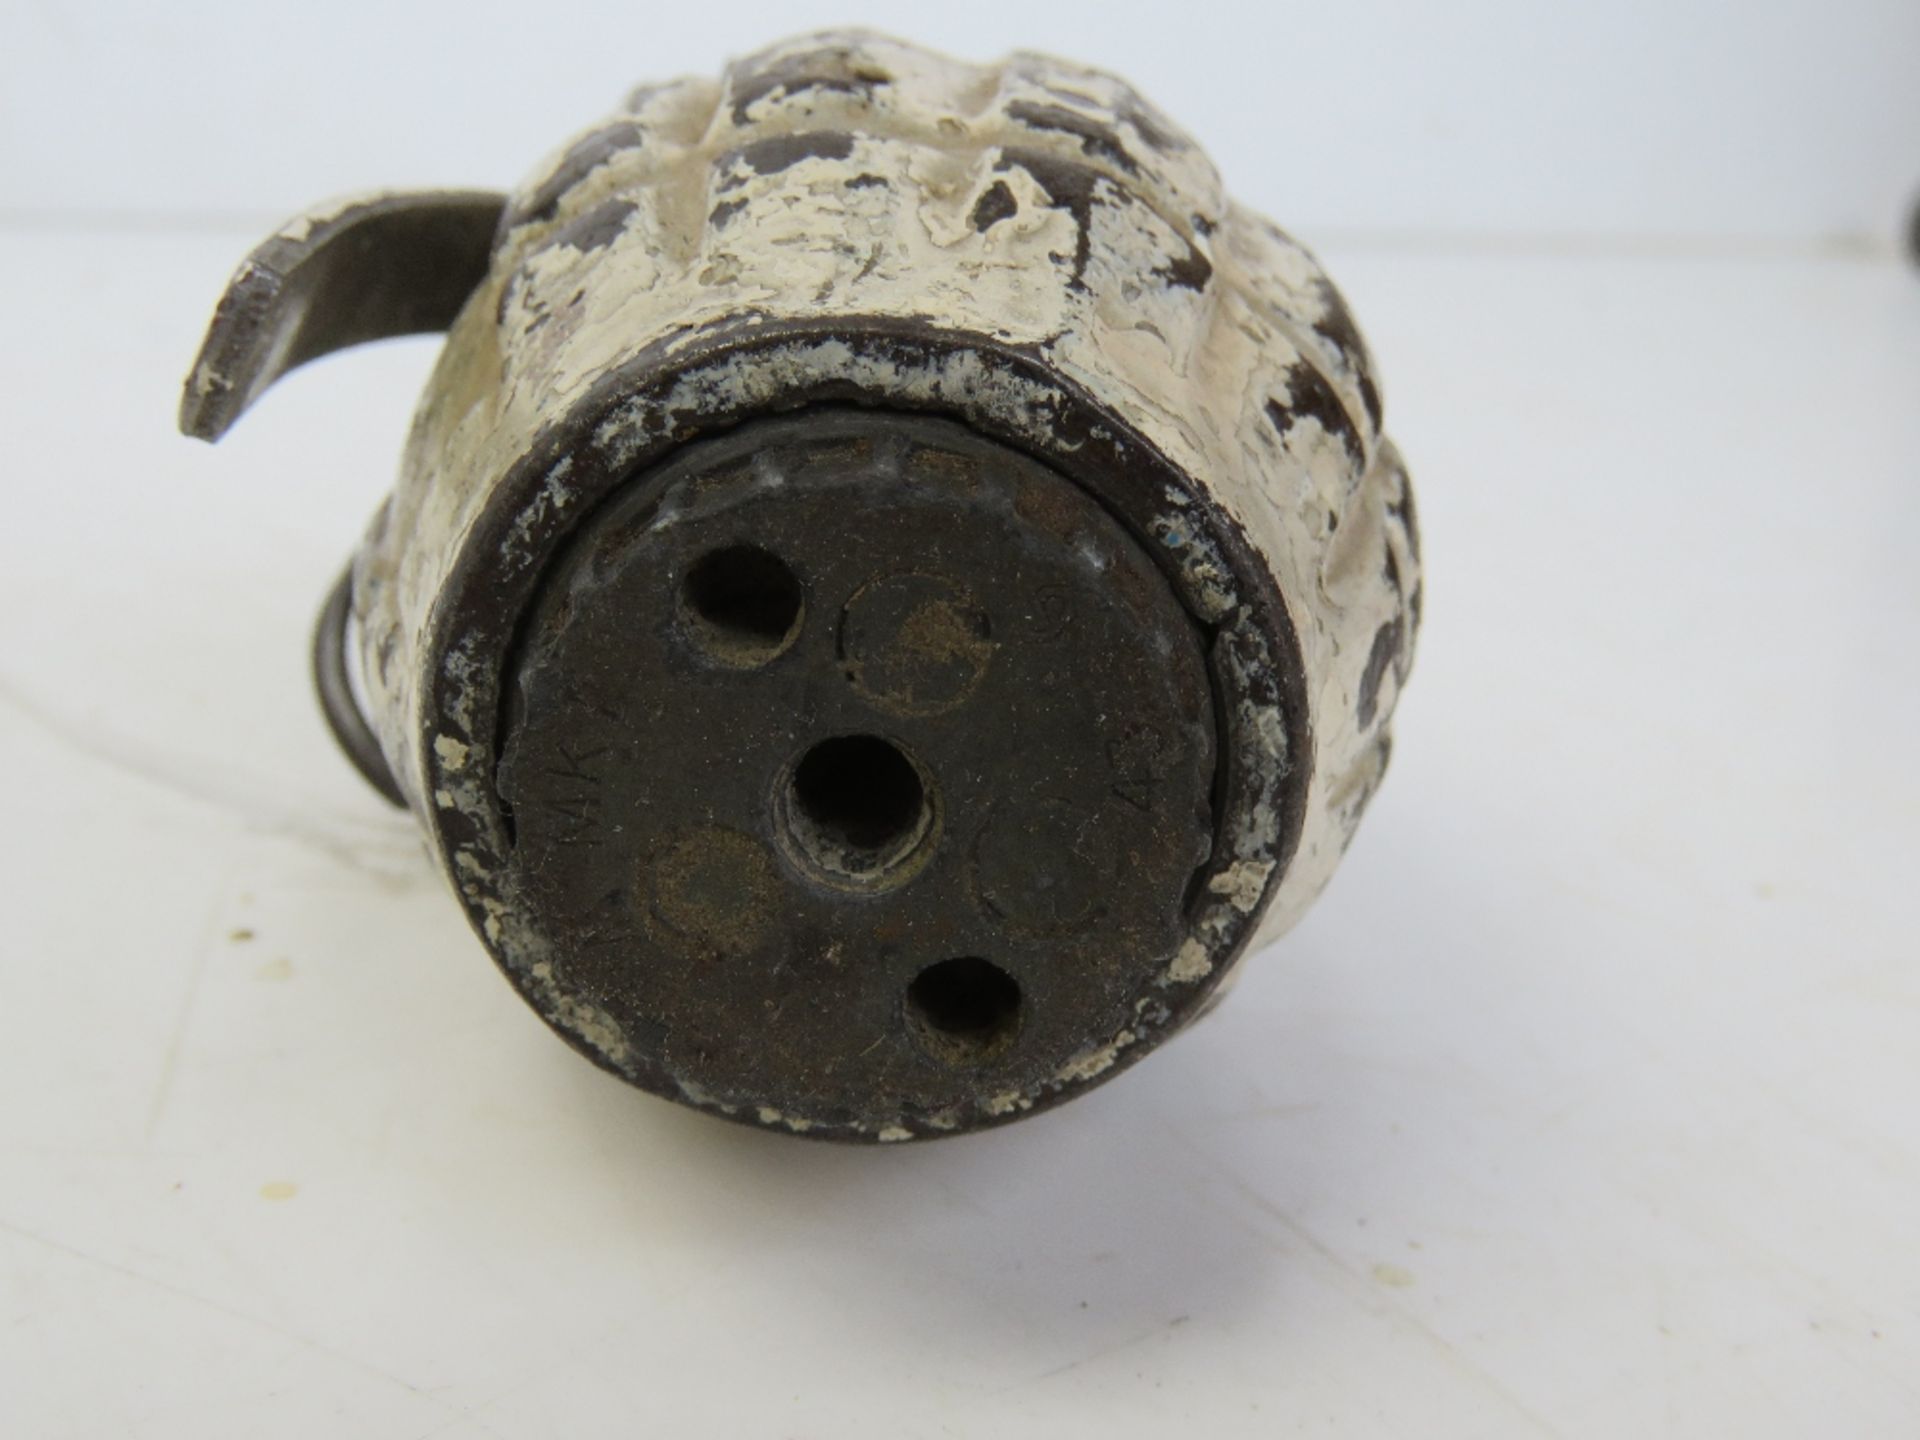 An inert British No.36 Mills training grenade with original paint. - Image 3 of 3